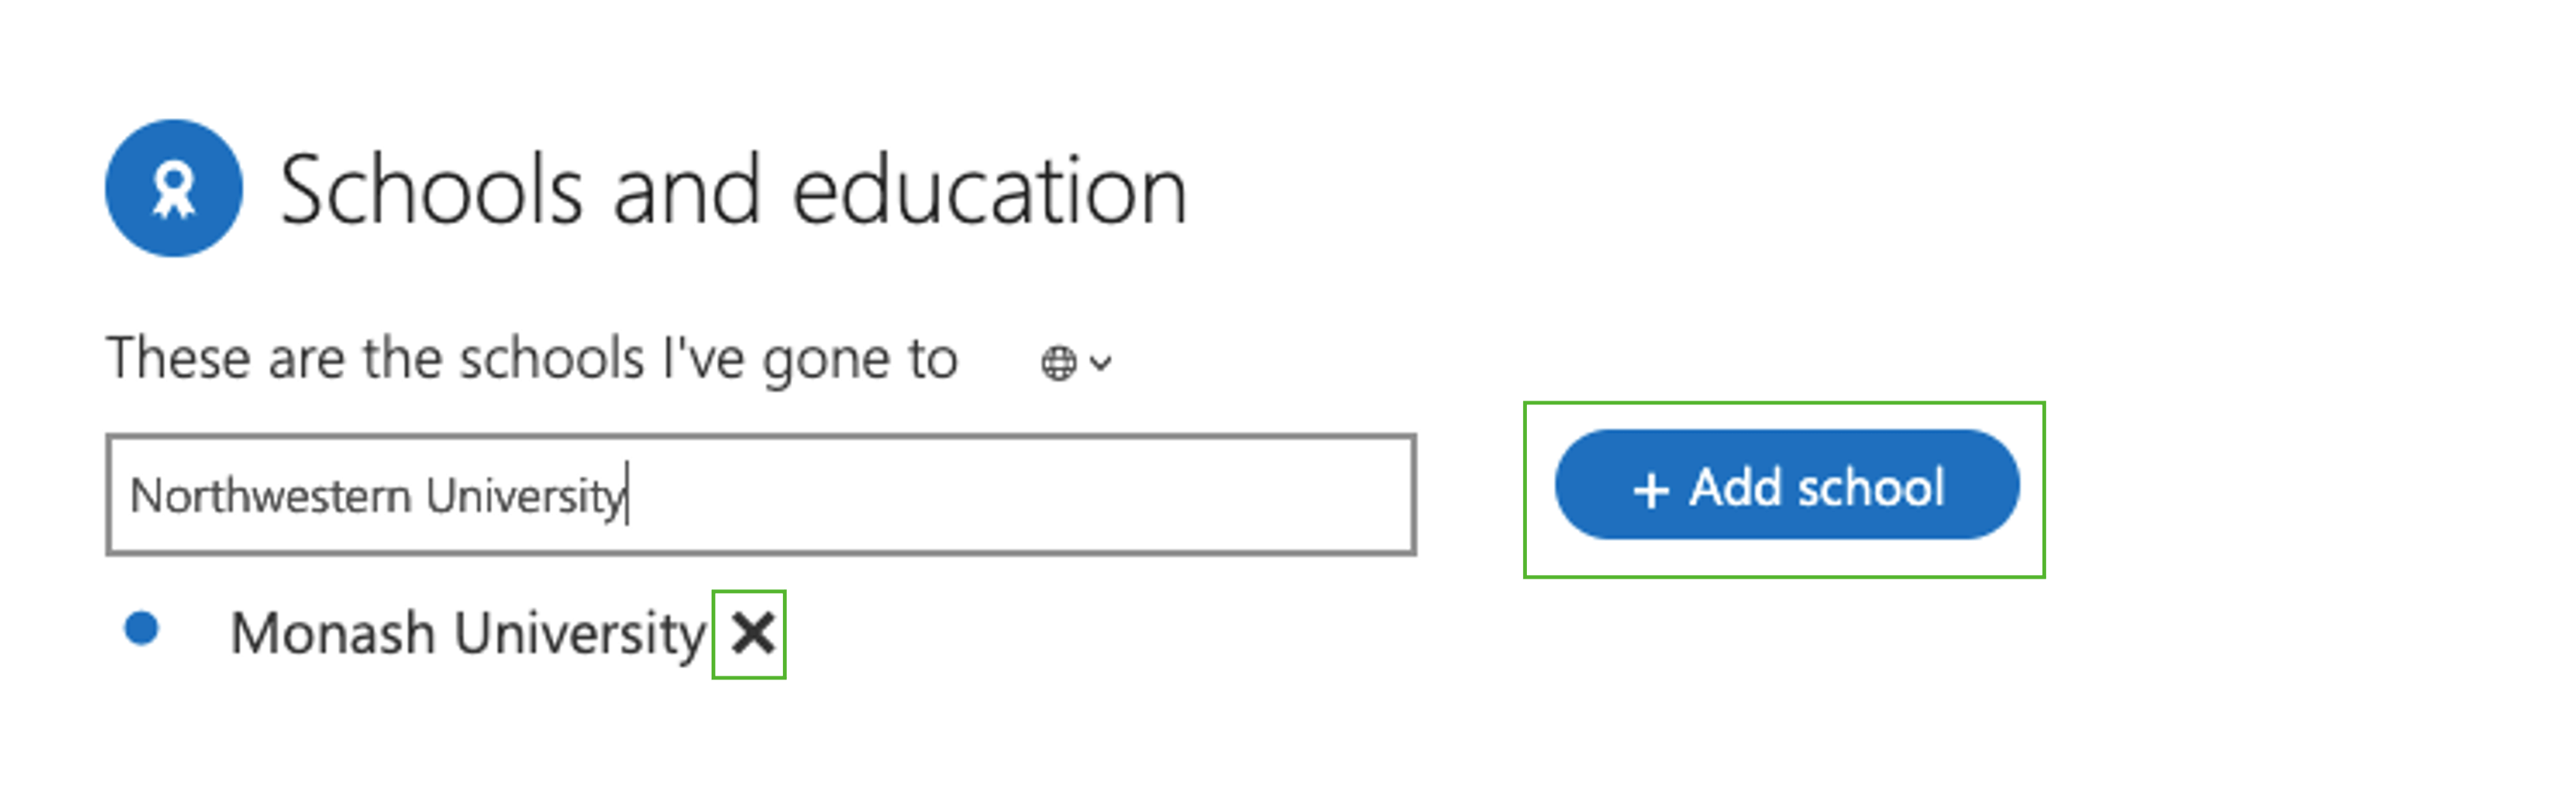 Add education in Microsoft Delve